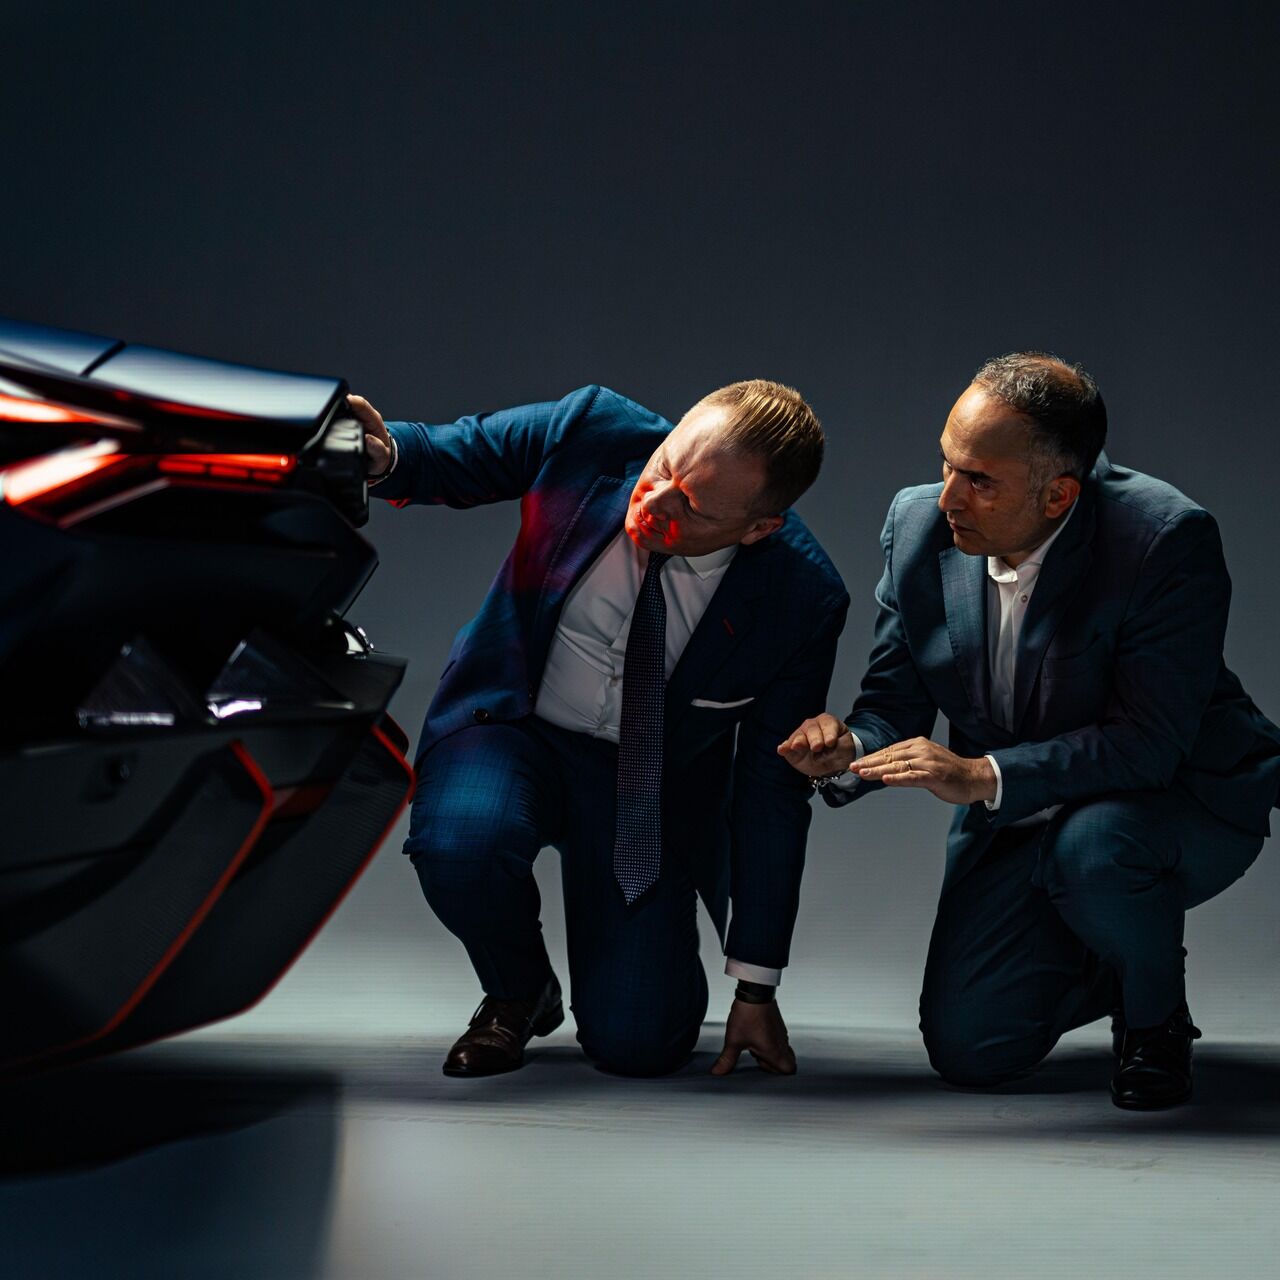 Desain dan aerodinamis: Mitja Borkert dan Ugo Riccio dari Automobili Lamborghini